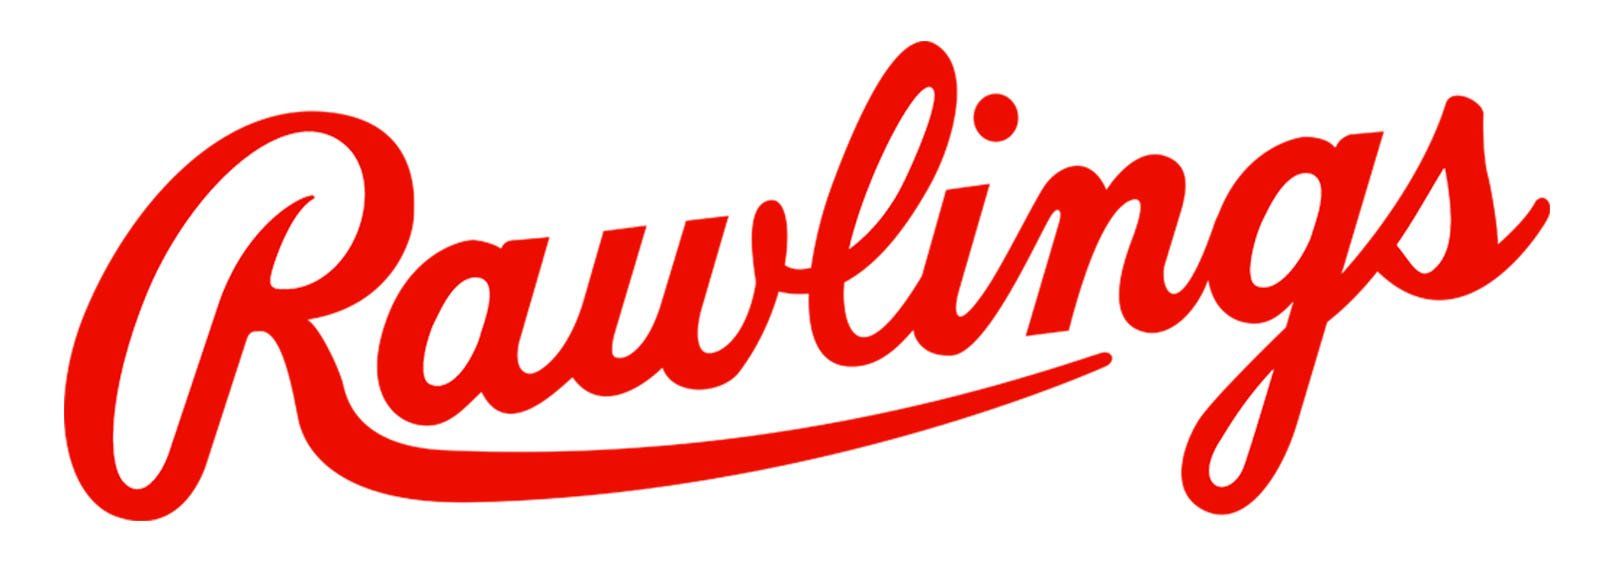 Rawling logo